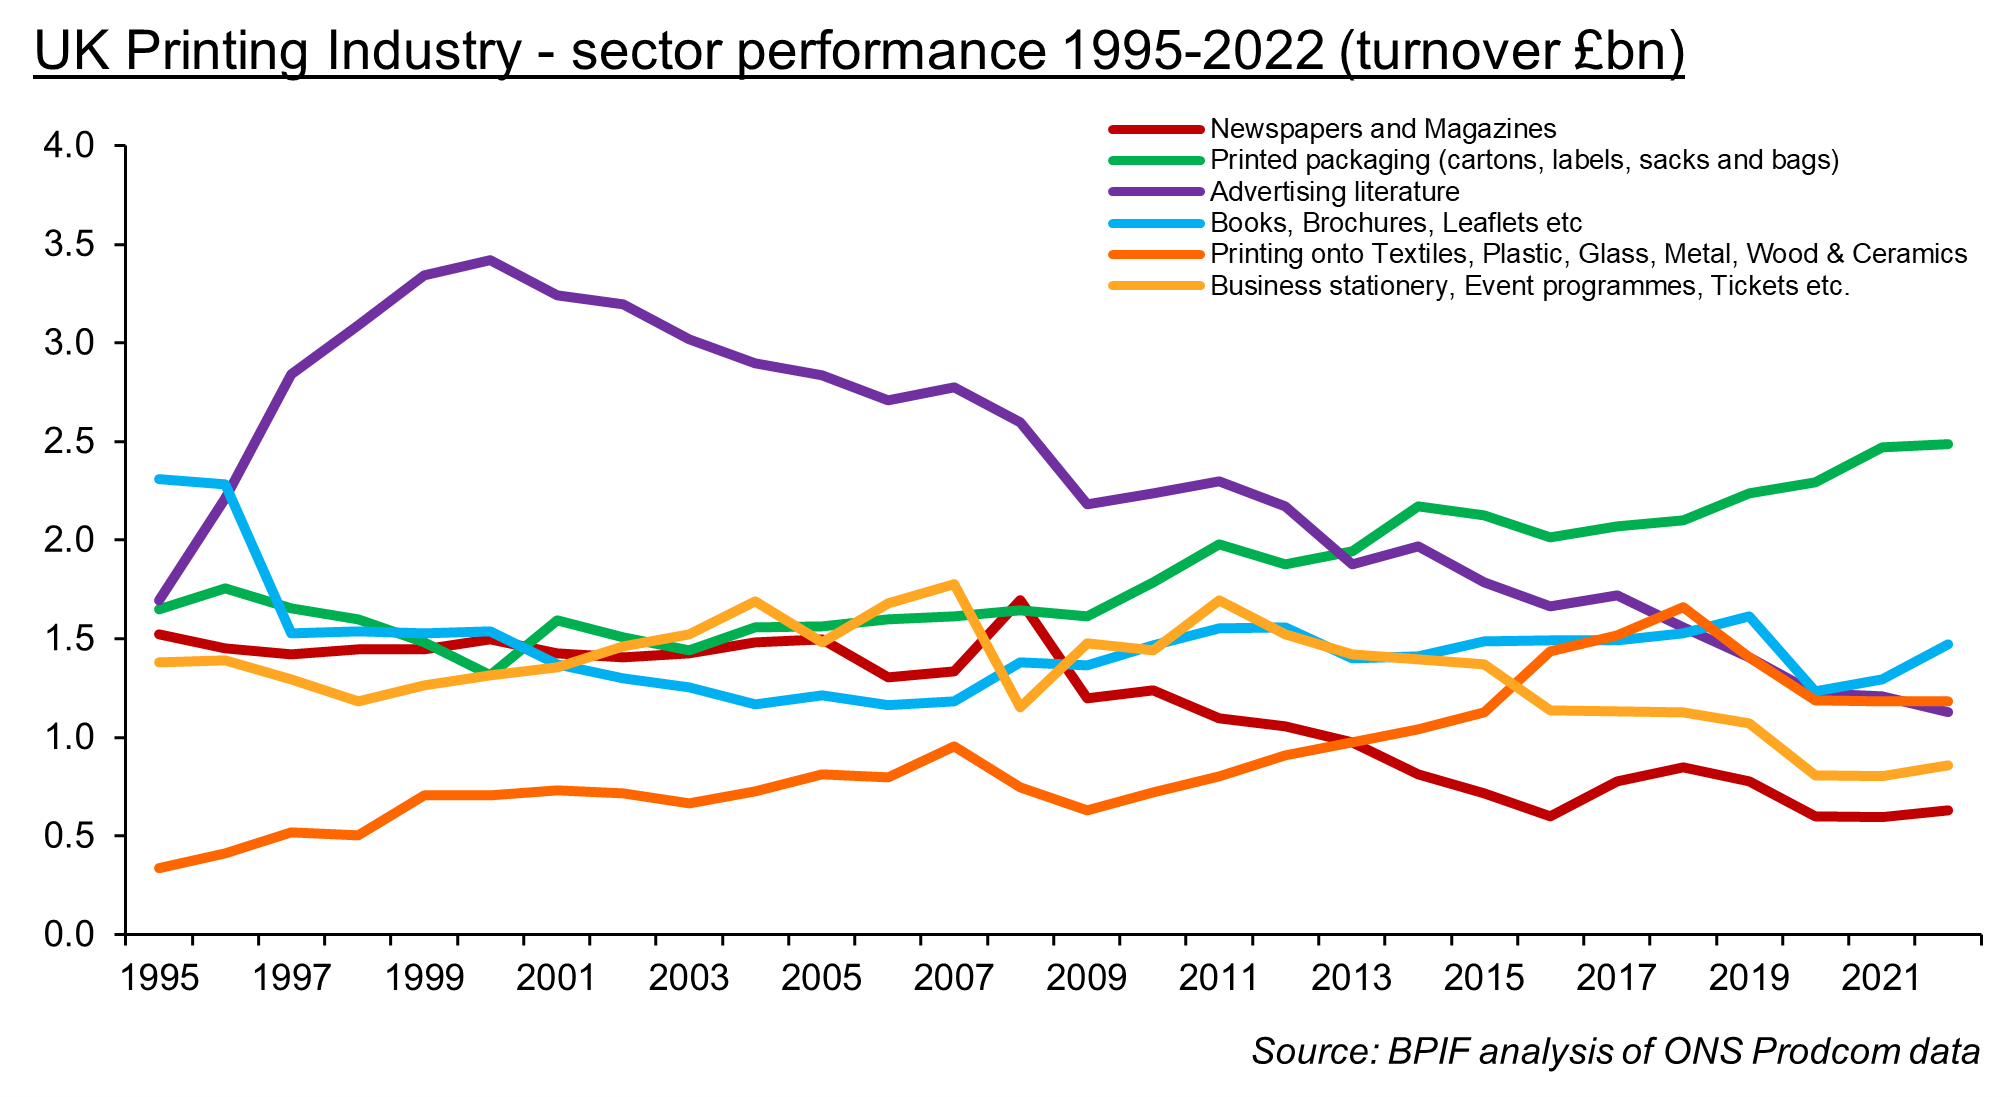 UK Printing - Sector Performance 1995-2022